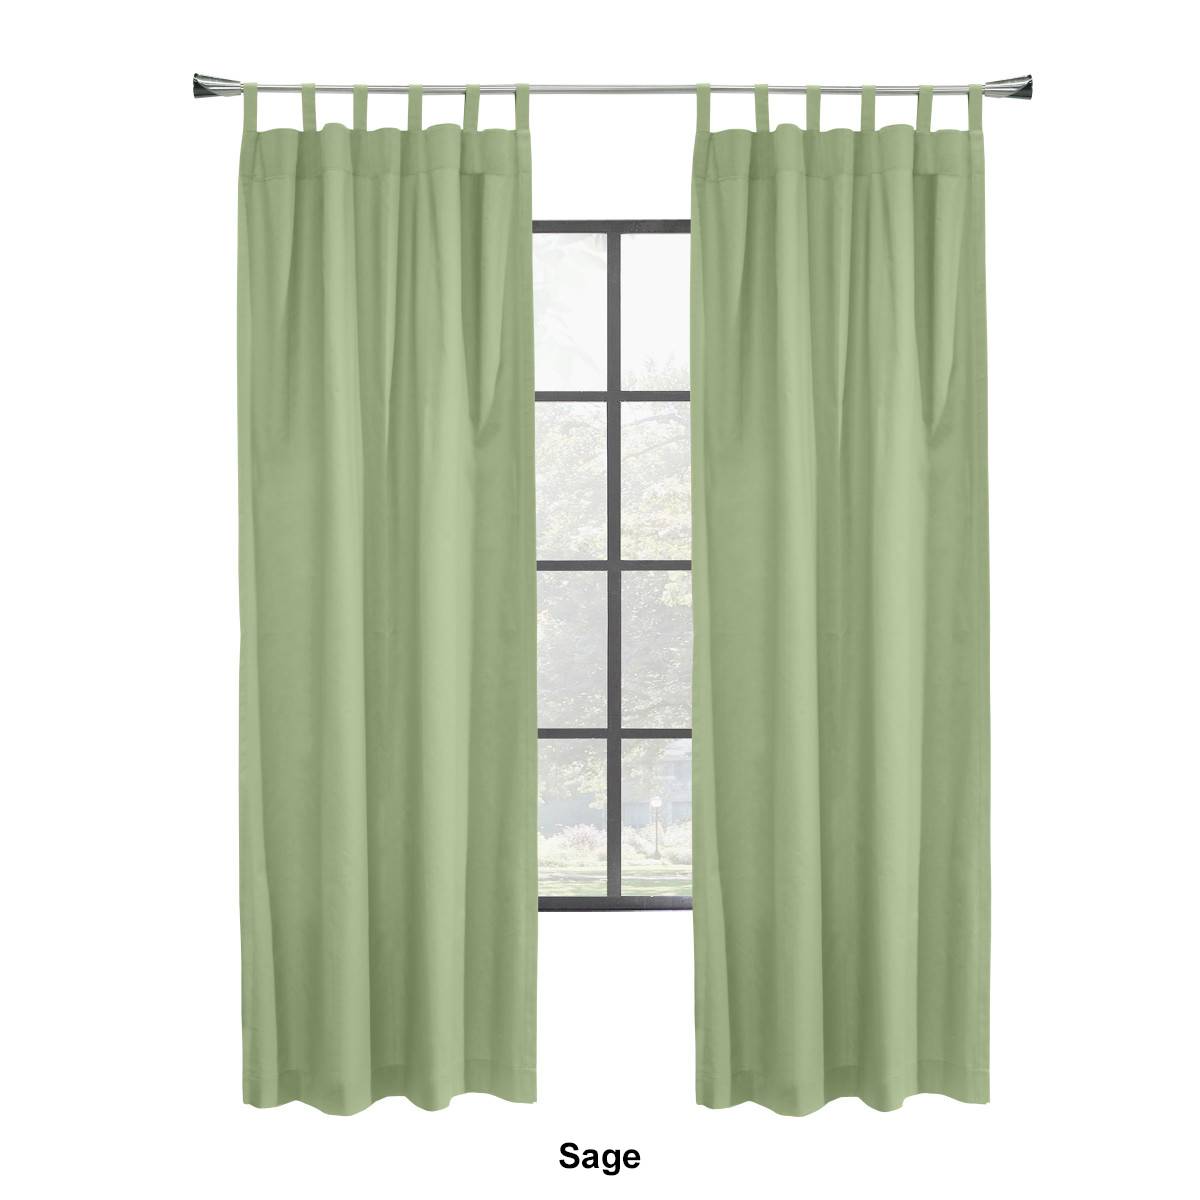 Thermalogic(tm) Weathermate Topsions Curtain Panel Pair